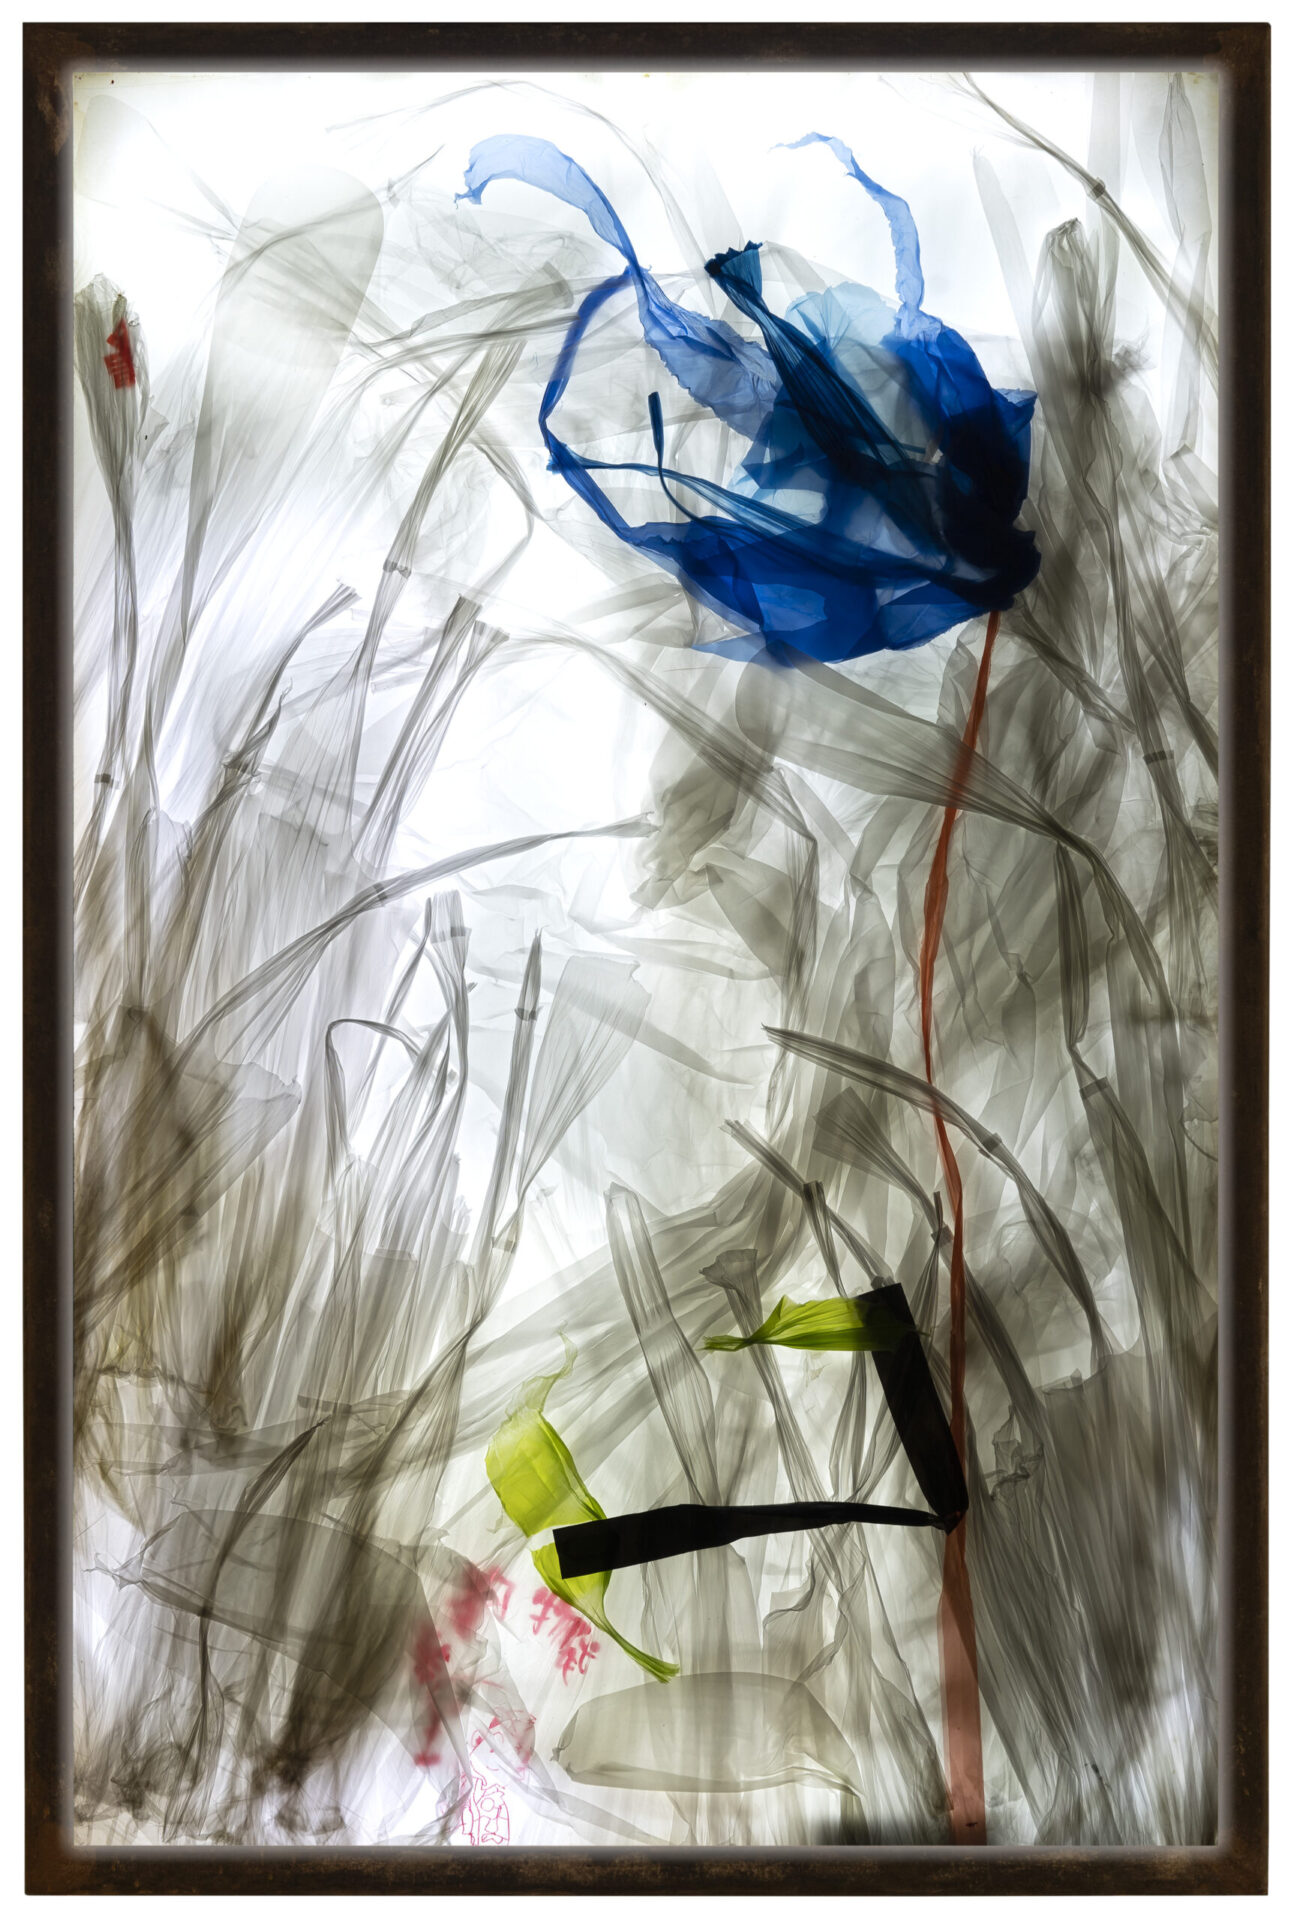 MPL 06 Hangzhou. La collita de Lotos The Lotus harvest 2016 100x70x5 cm Iron plastic glass led light plastic bags scaled Pigment Gallery Galería de Arte en Barcelona Mario Pasqualotto